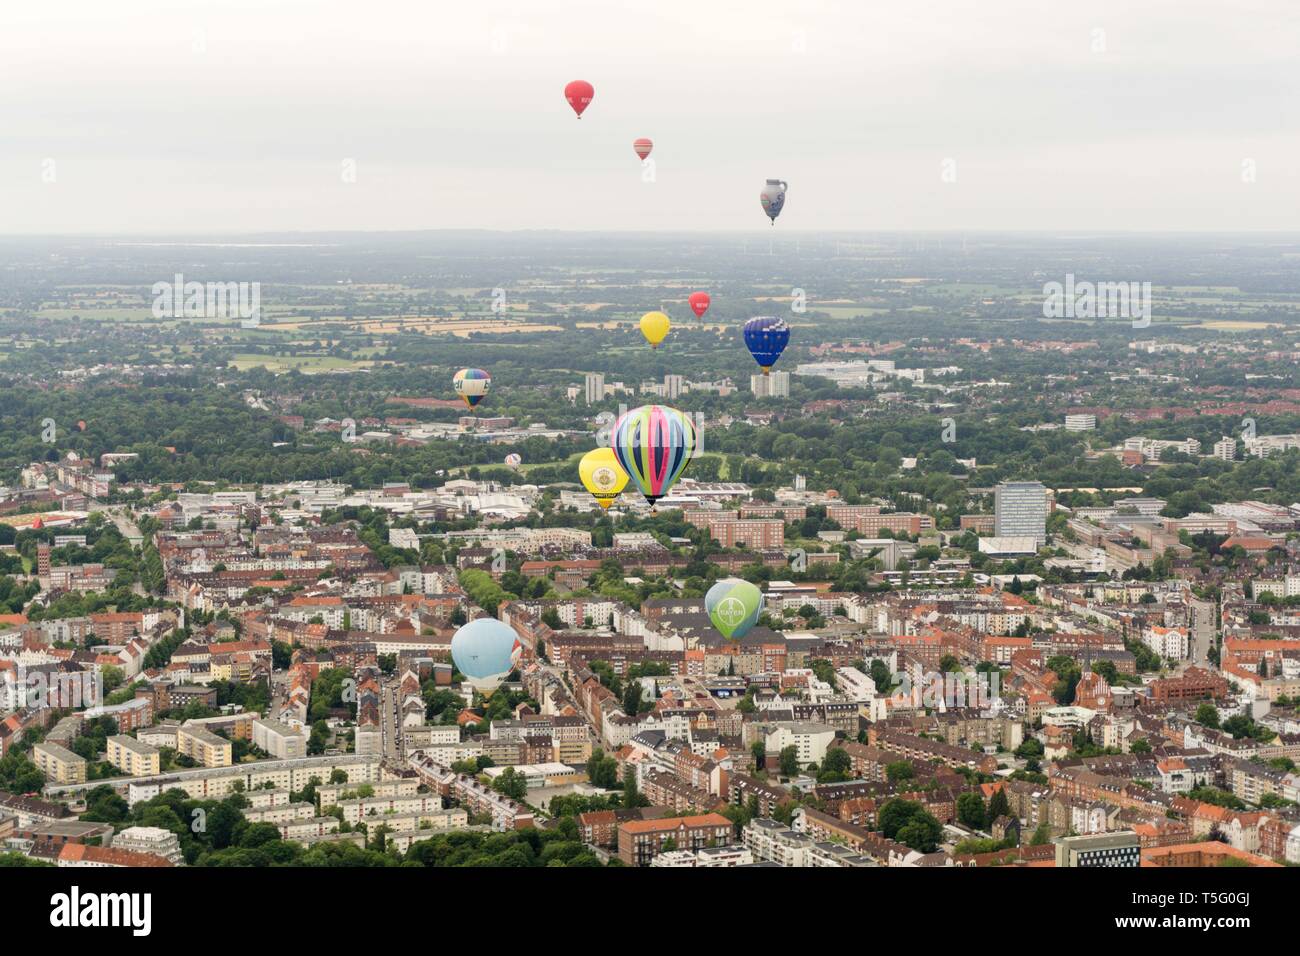 Luftaufnahme Kieler Woche Heißluftballon / Fotografia aerea mongolfiera Foto Stock